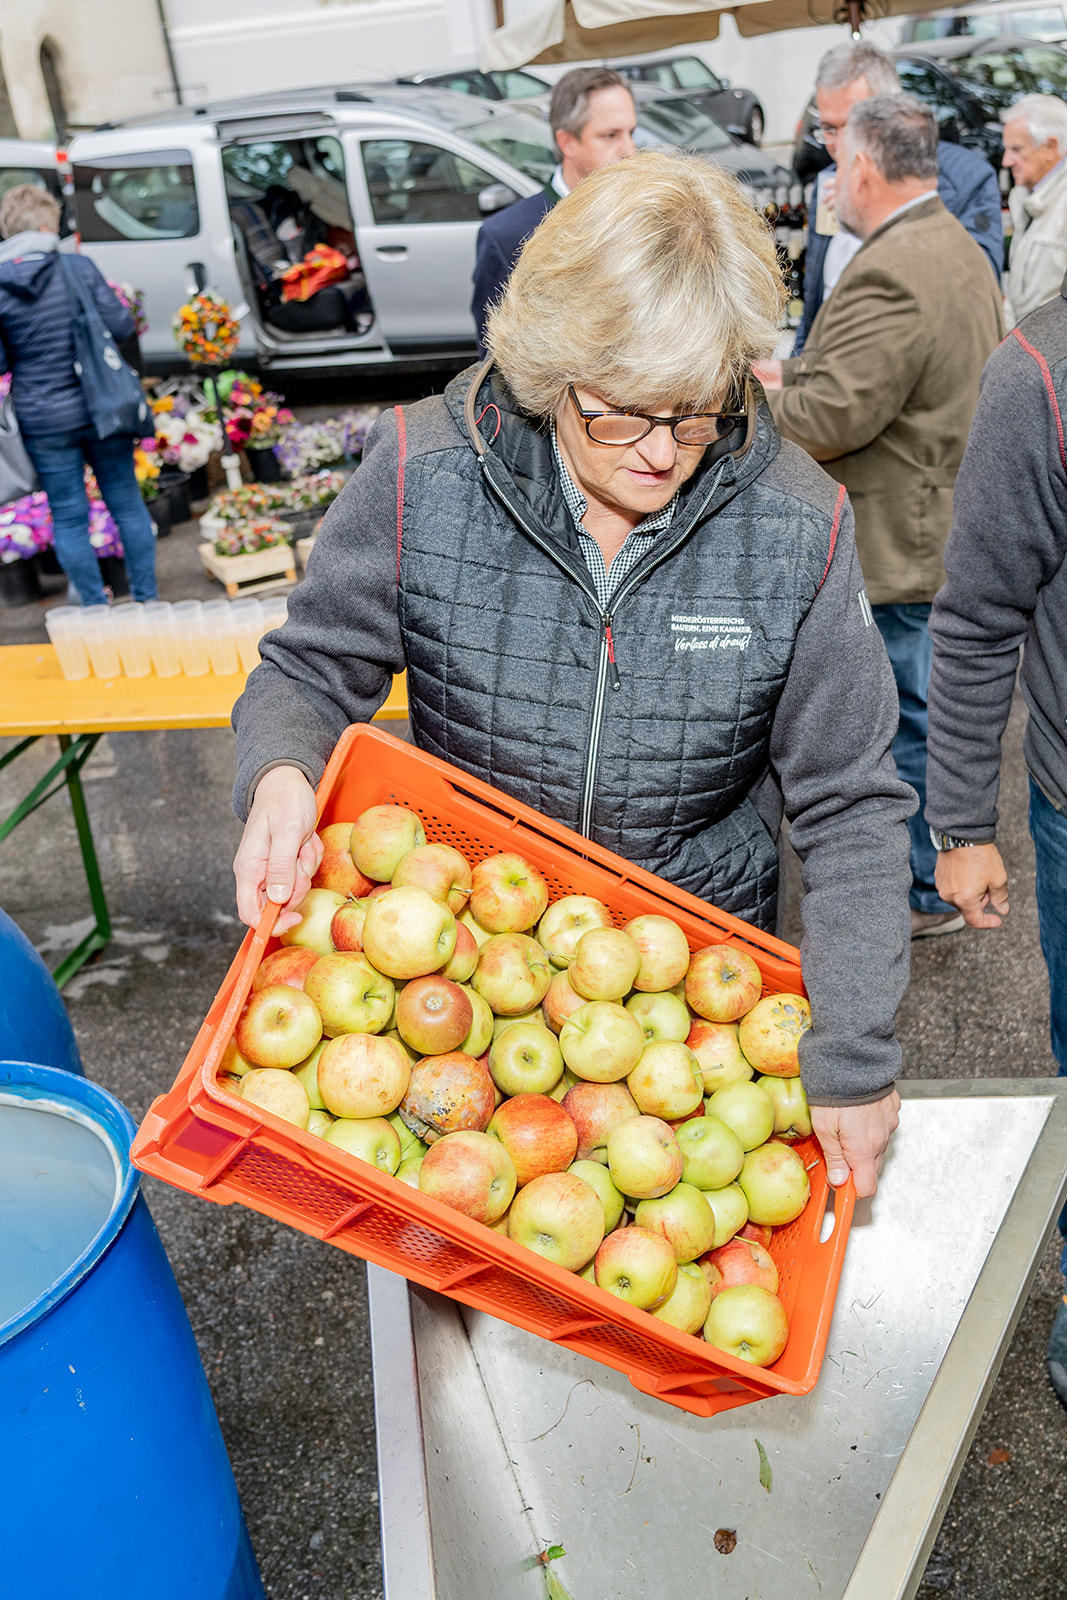 Apfelsaftaktion "Apfelsaft aus Apfel g´macht" der LK NÖ.jpg